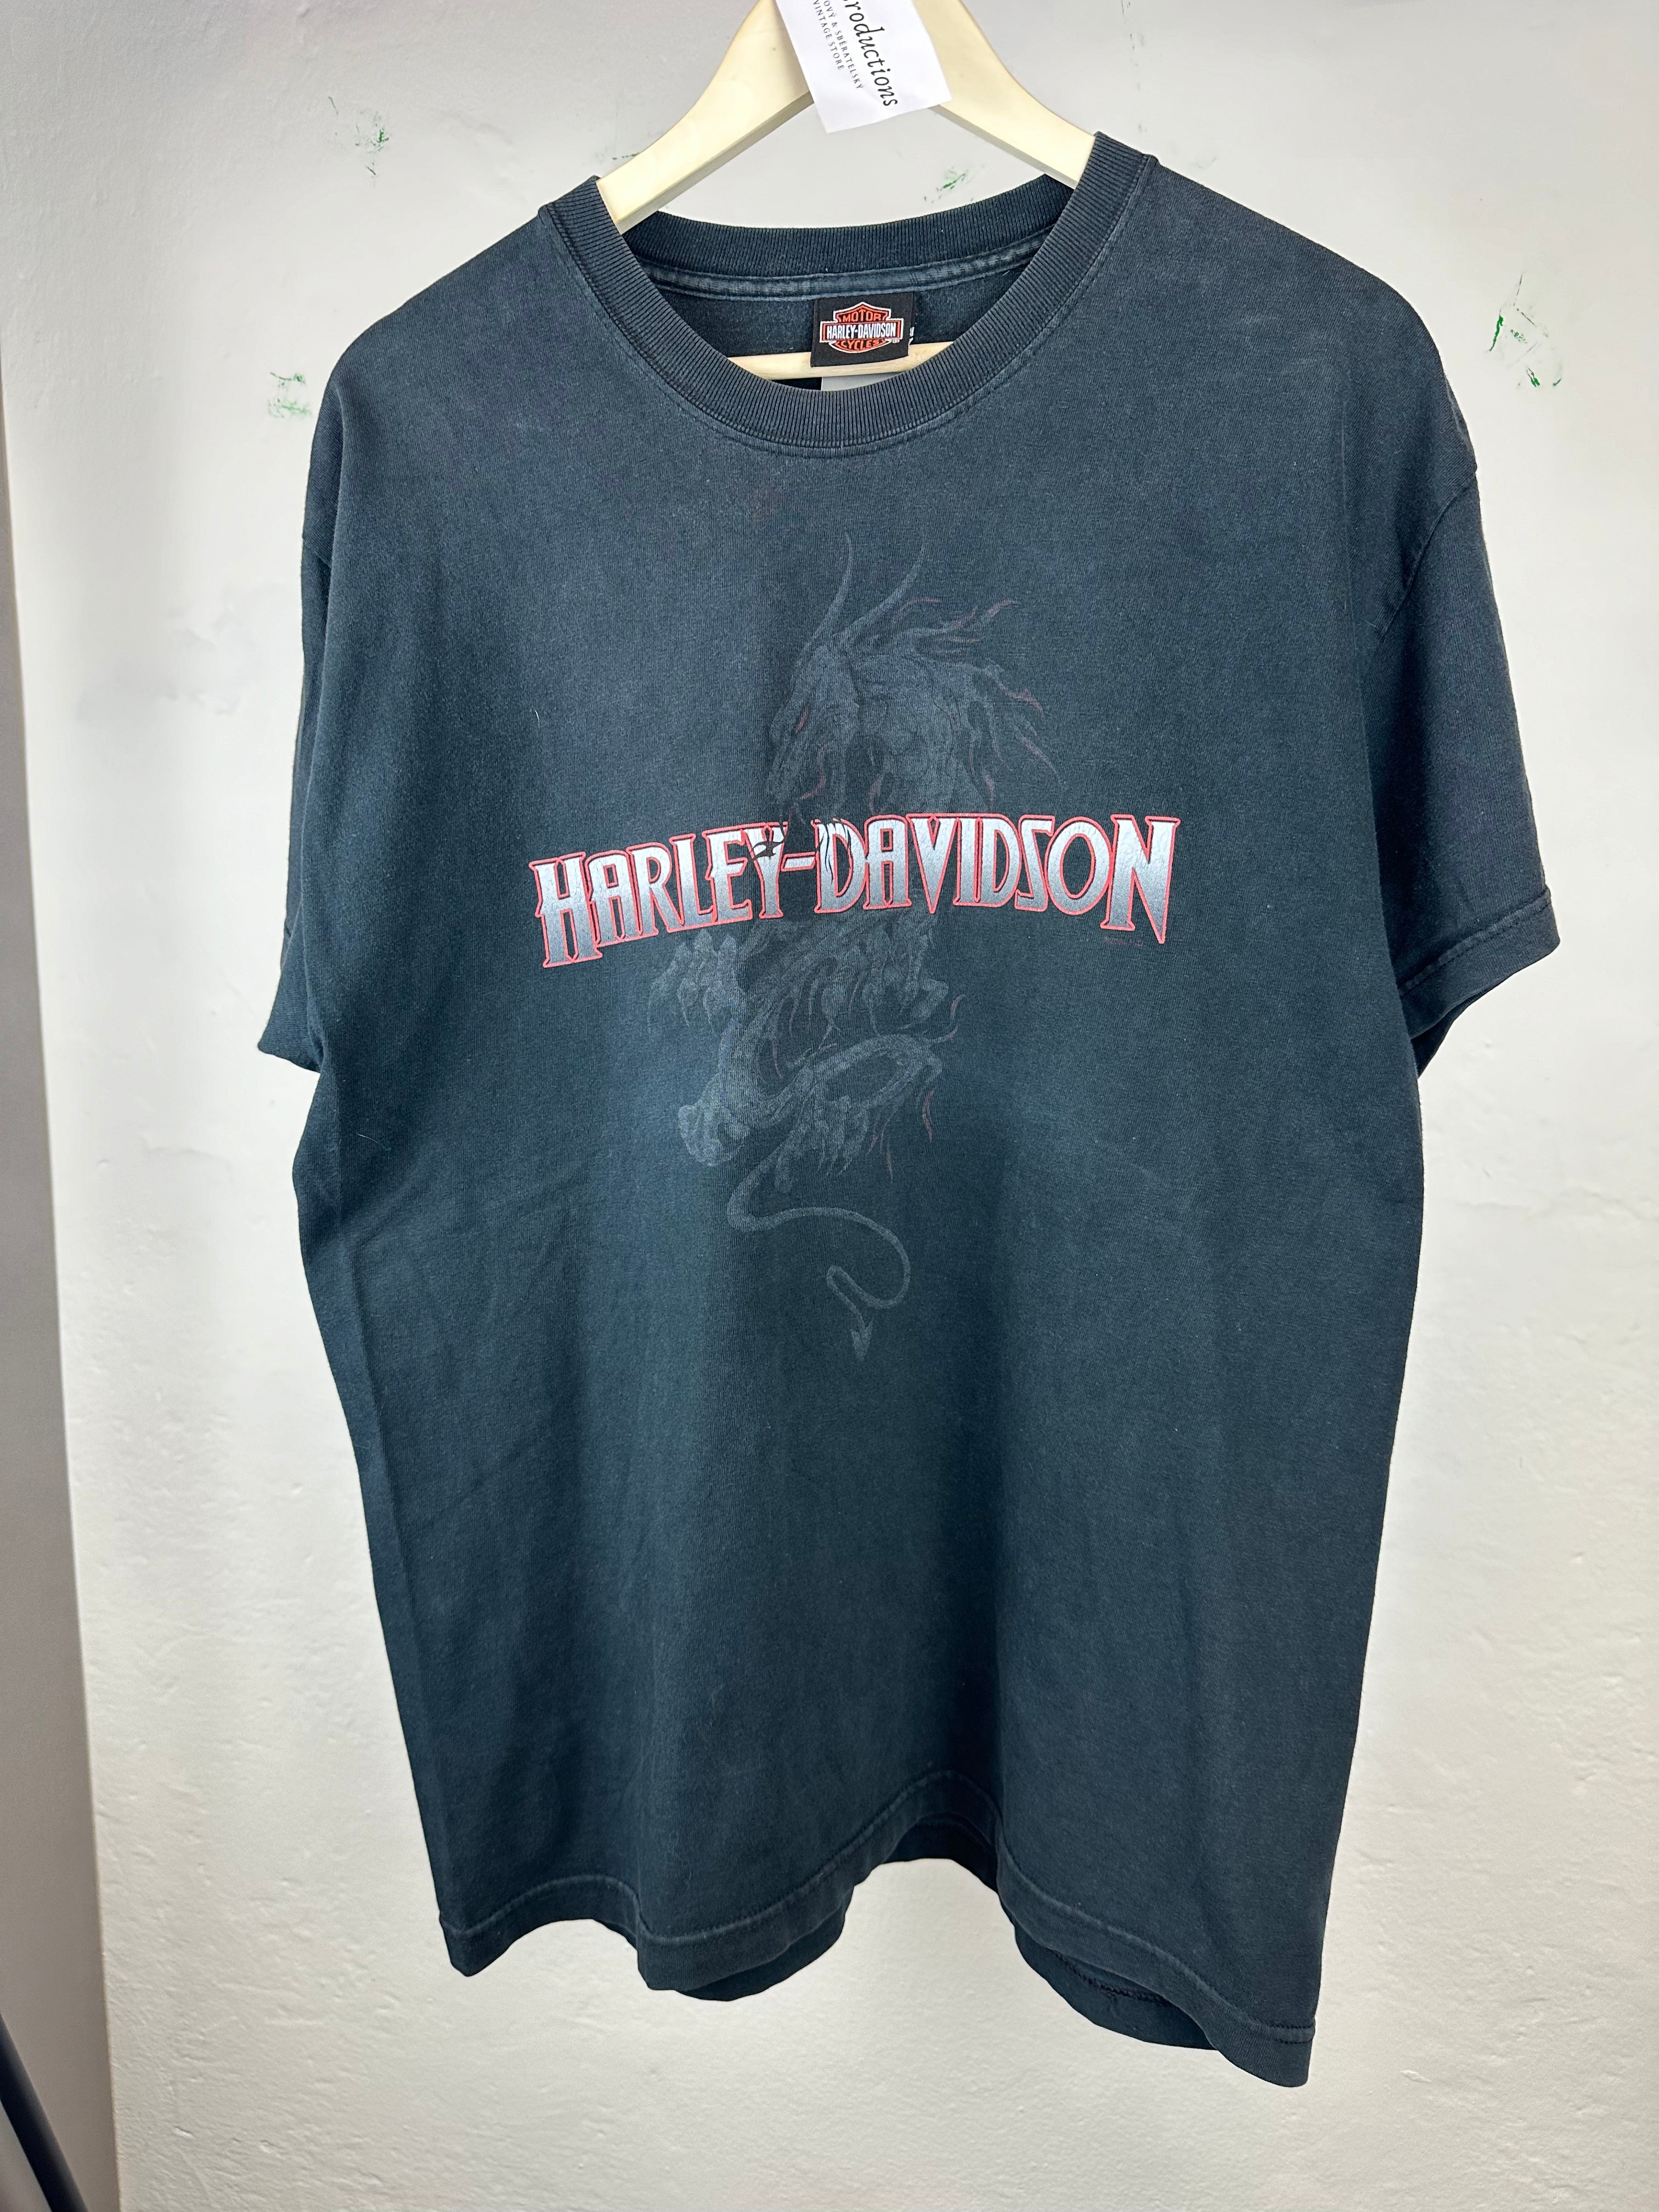 Vintage Harley Davidson Dragon 2004 T-shirt - size L